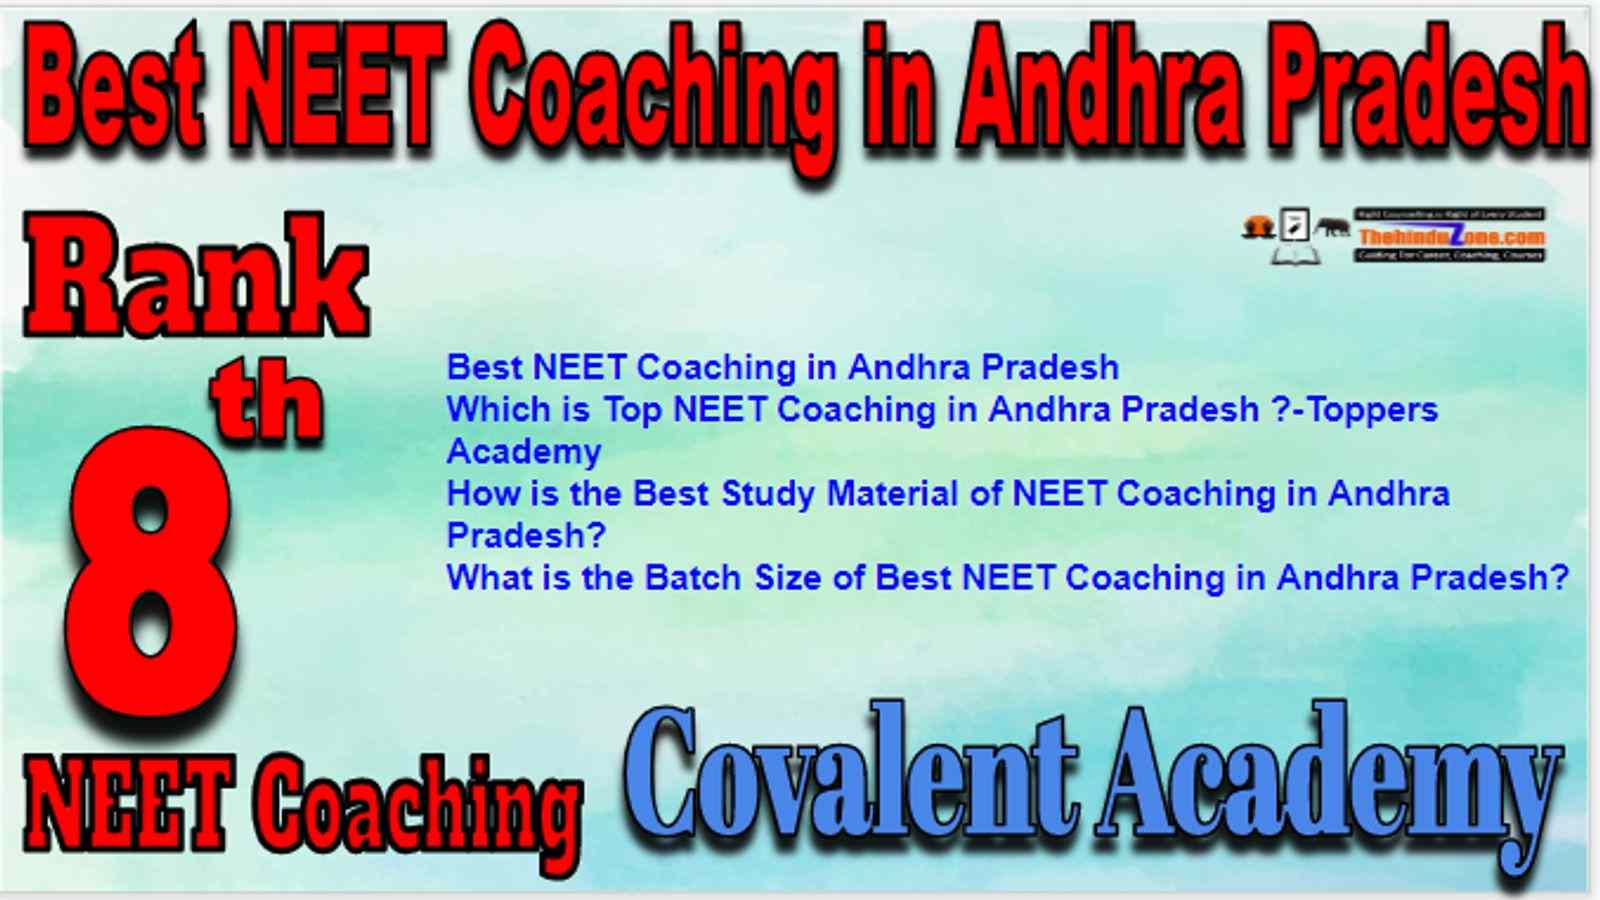 Rank 8 Best NEET Coaching in Andhra Pradesh